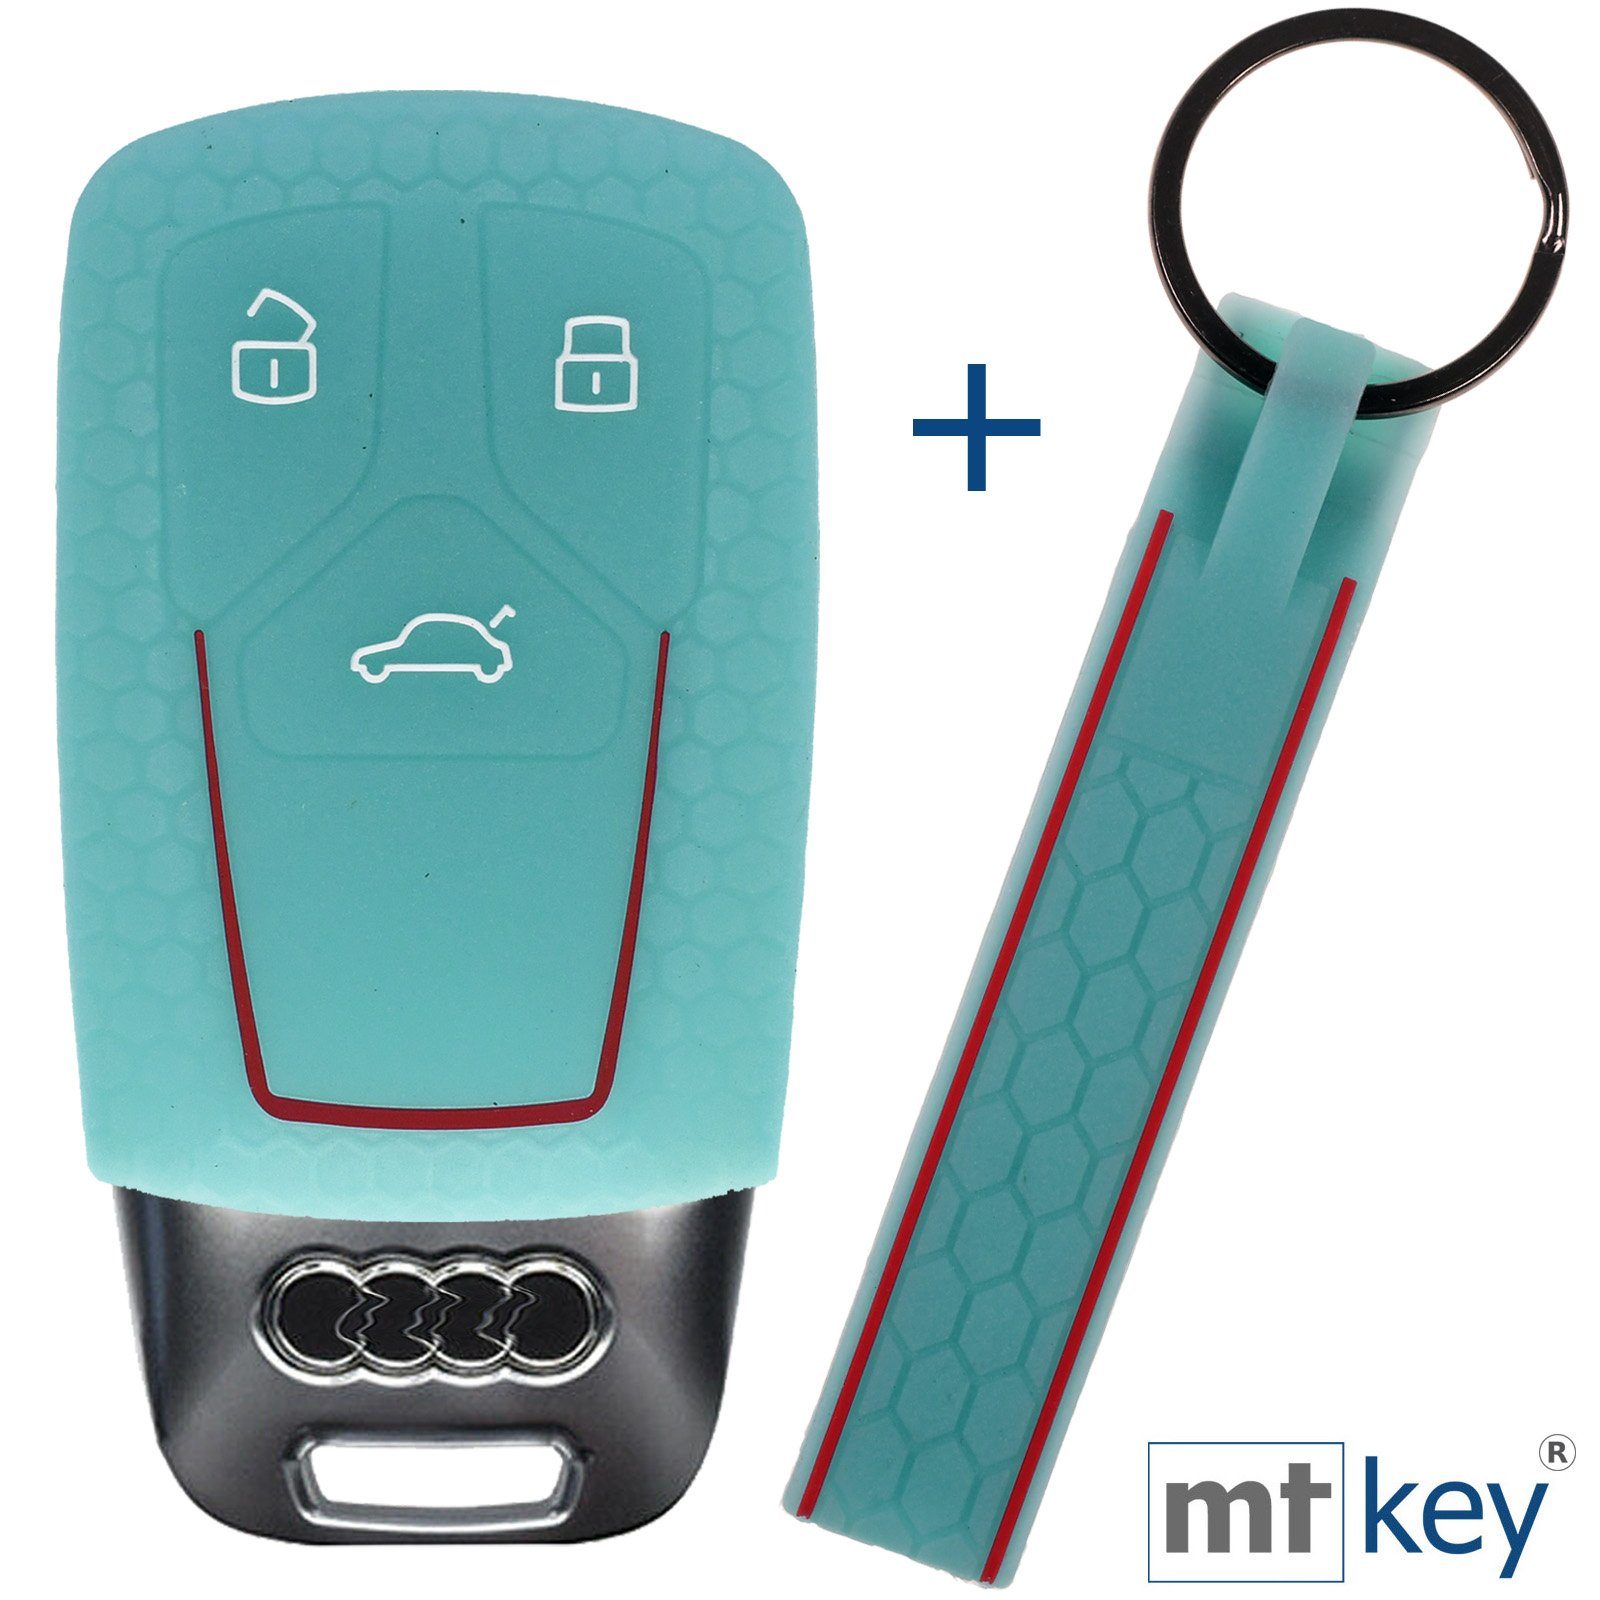 mt-key Schlüsseltasche Autoschlüssel Silikon Schutzhülle Wabe Design Glowblue + Schlüsselband, für Audi A4 A5 A6 A7 TT Q2 Q5 Q7 A8 Q8 3 Tasten KEYLESS SMARTKEY Fluoreszierend Blau